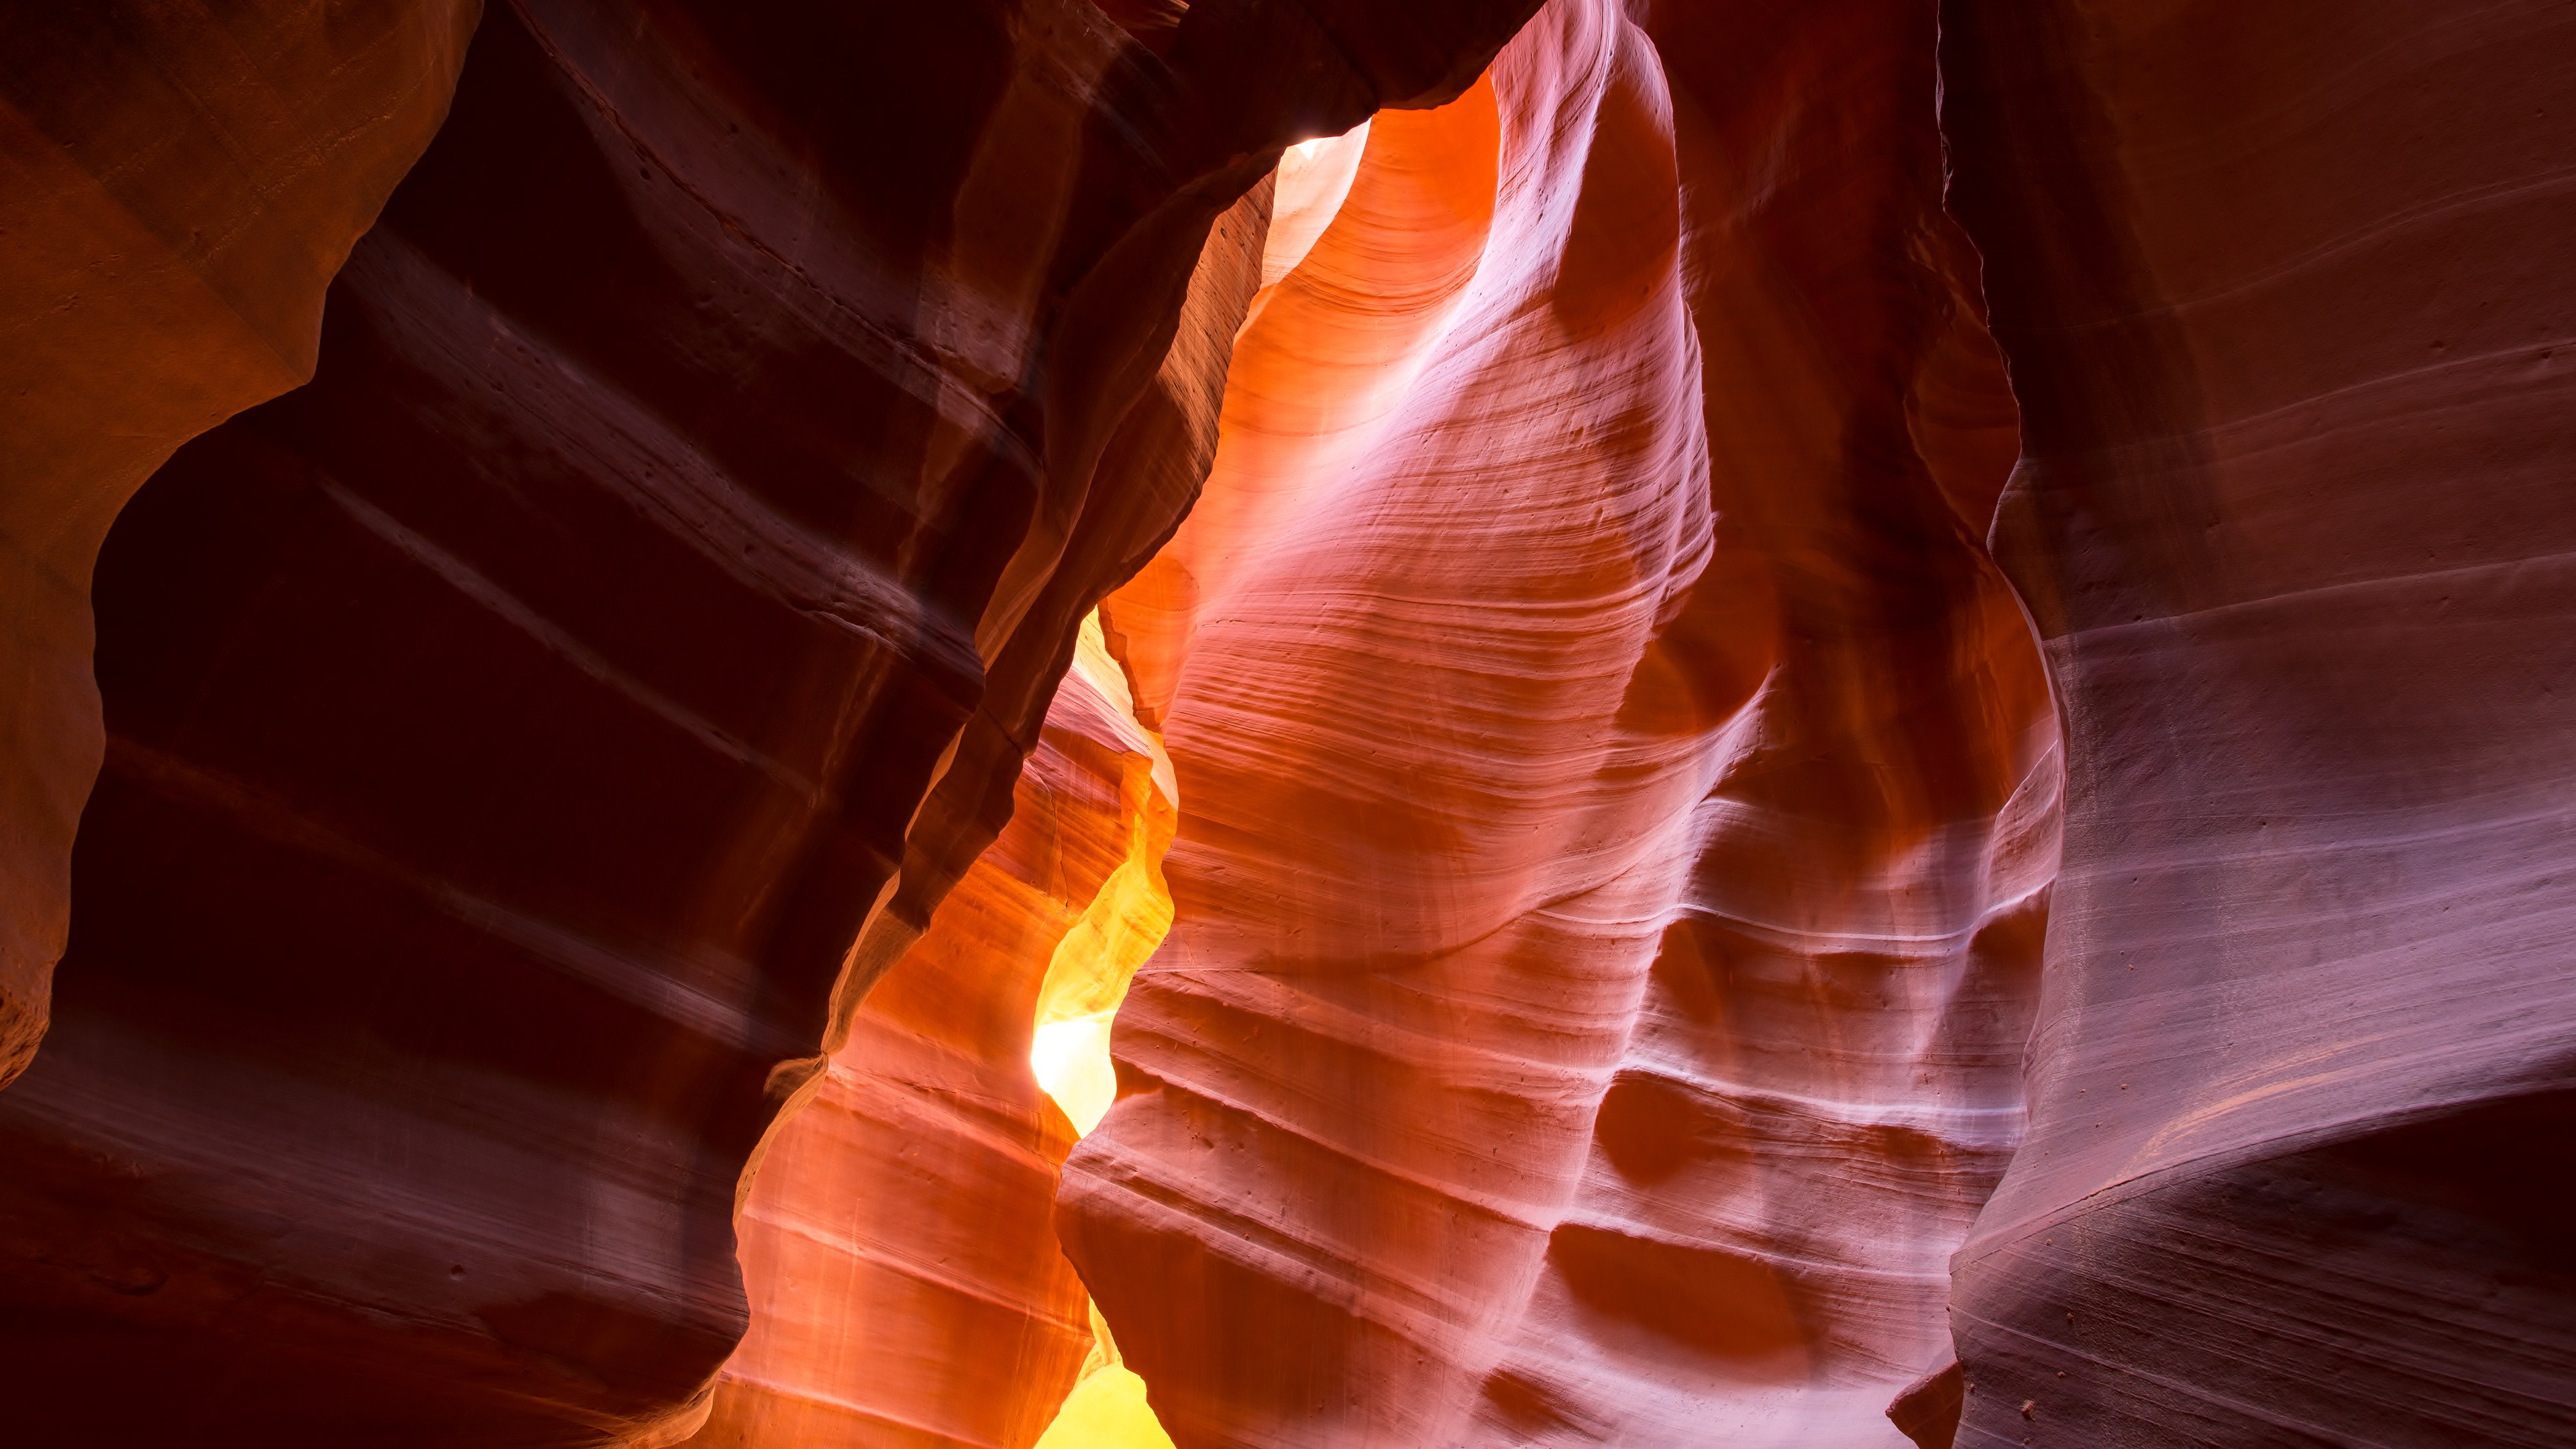 Antelope Canyon 4k Ultra HD Wallpaper. Background Image